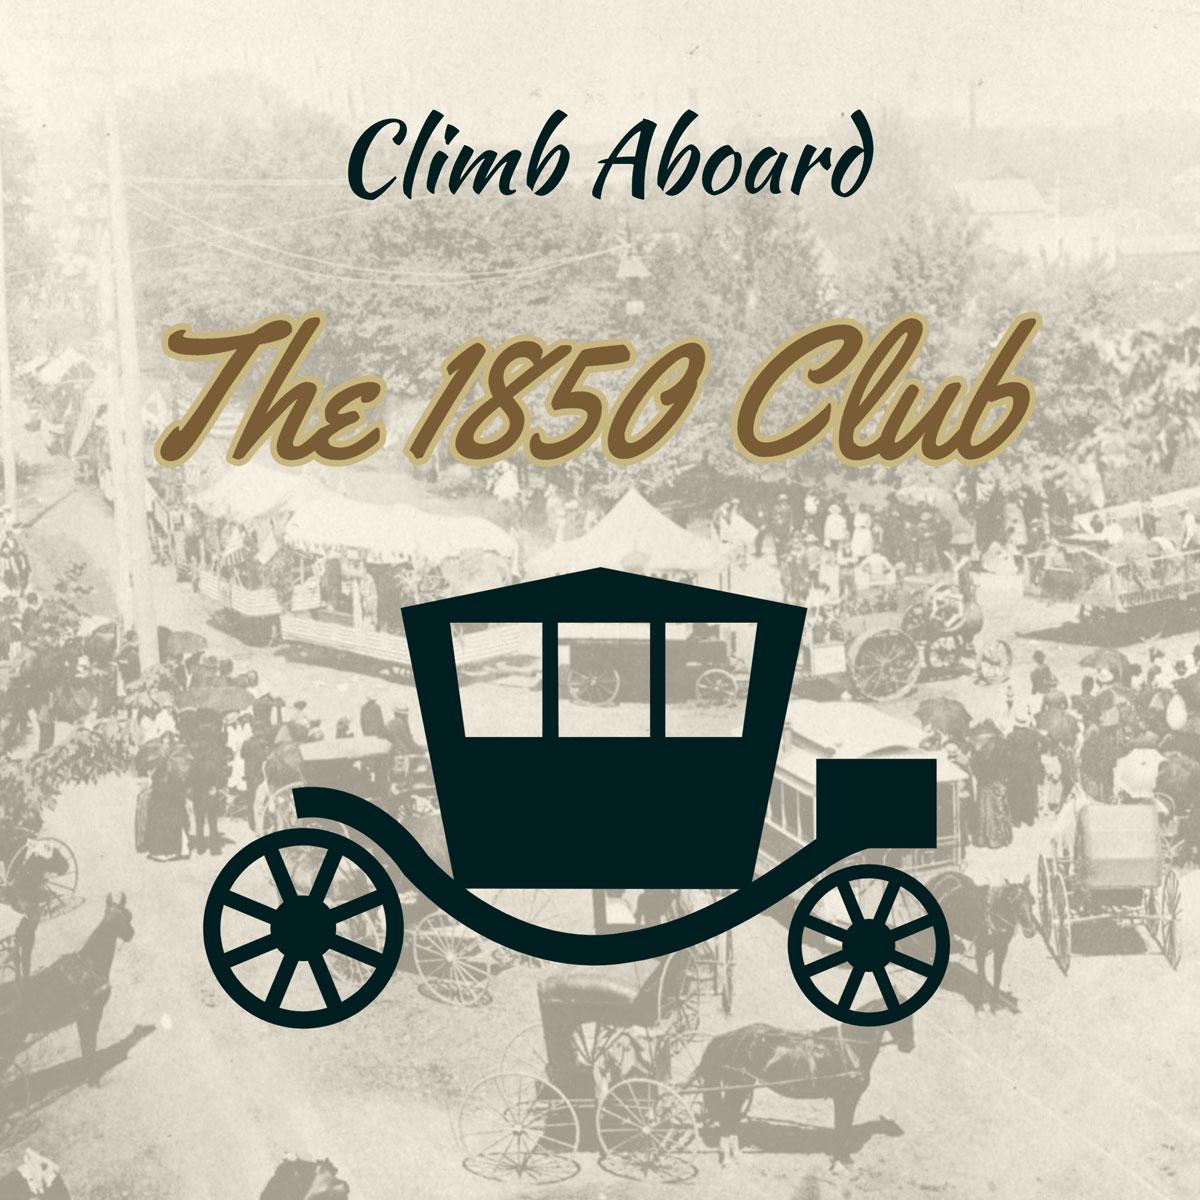 1850 club